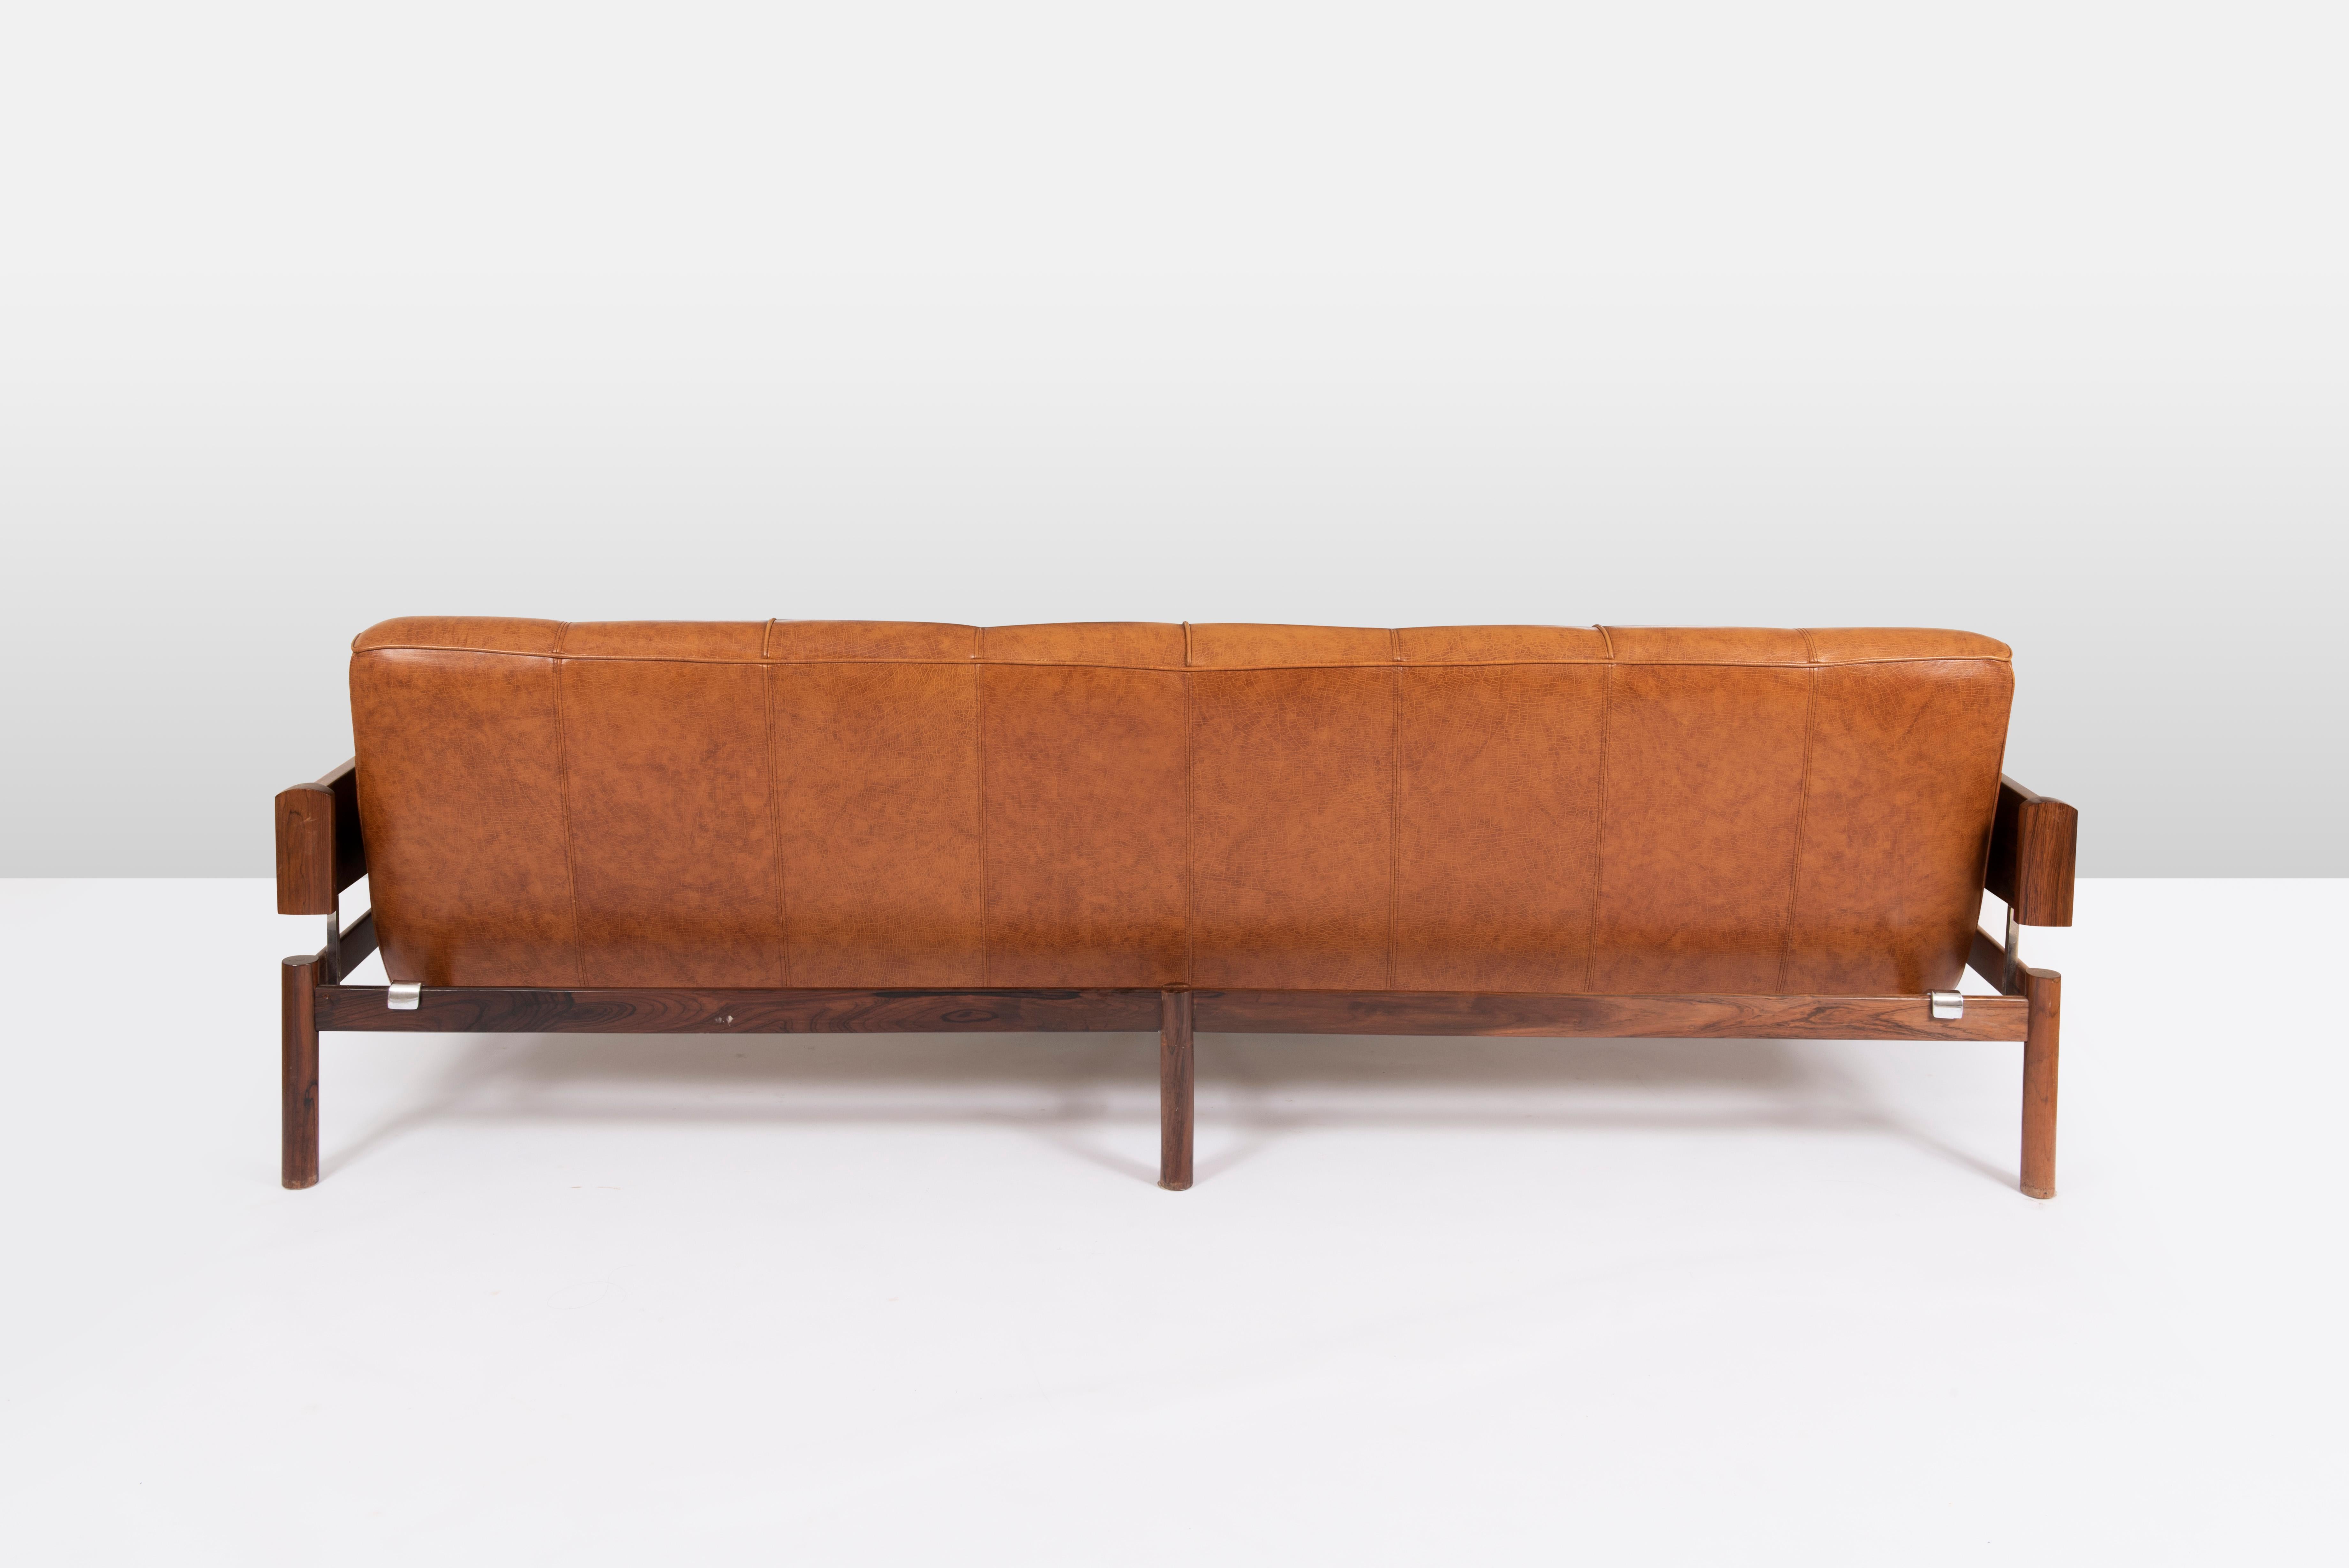 Brasilianisches modernes Sofa, Percival Lafer, 1960er Jahre (20. Jahrhundert) im Angebot